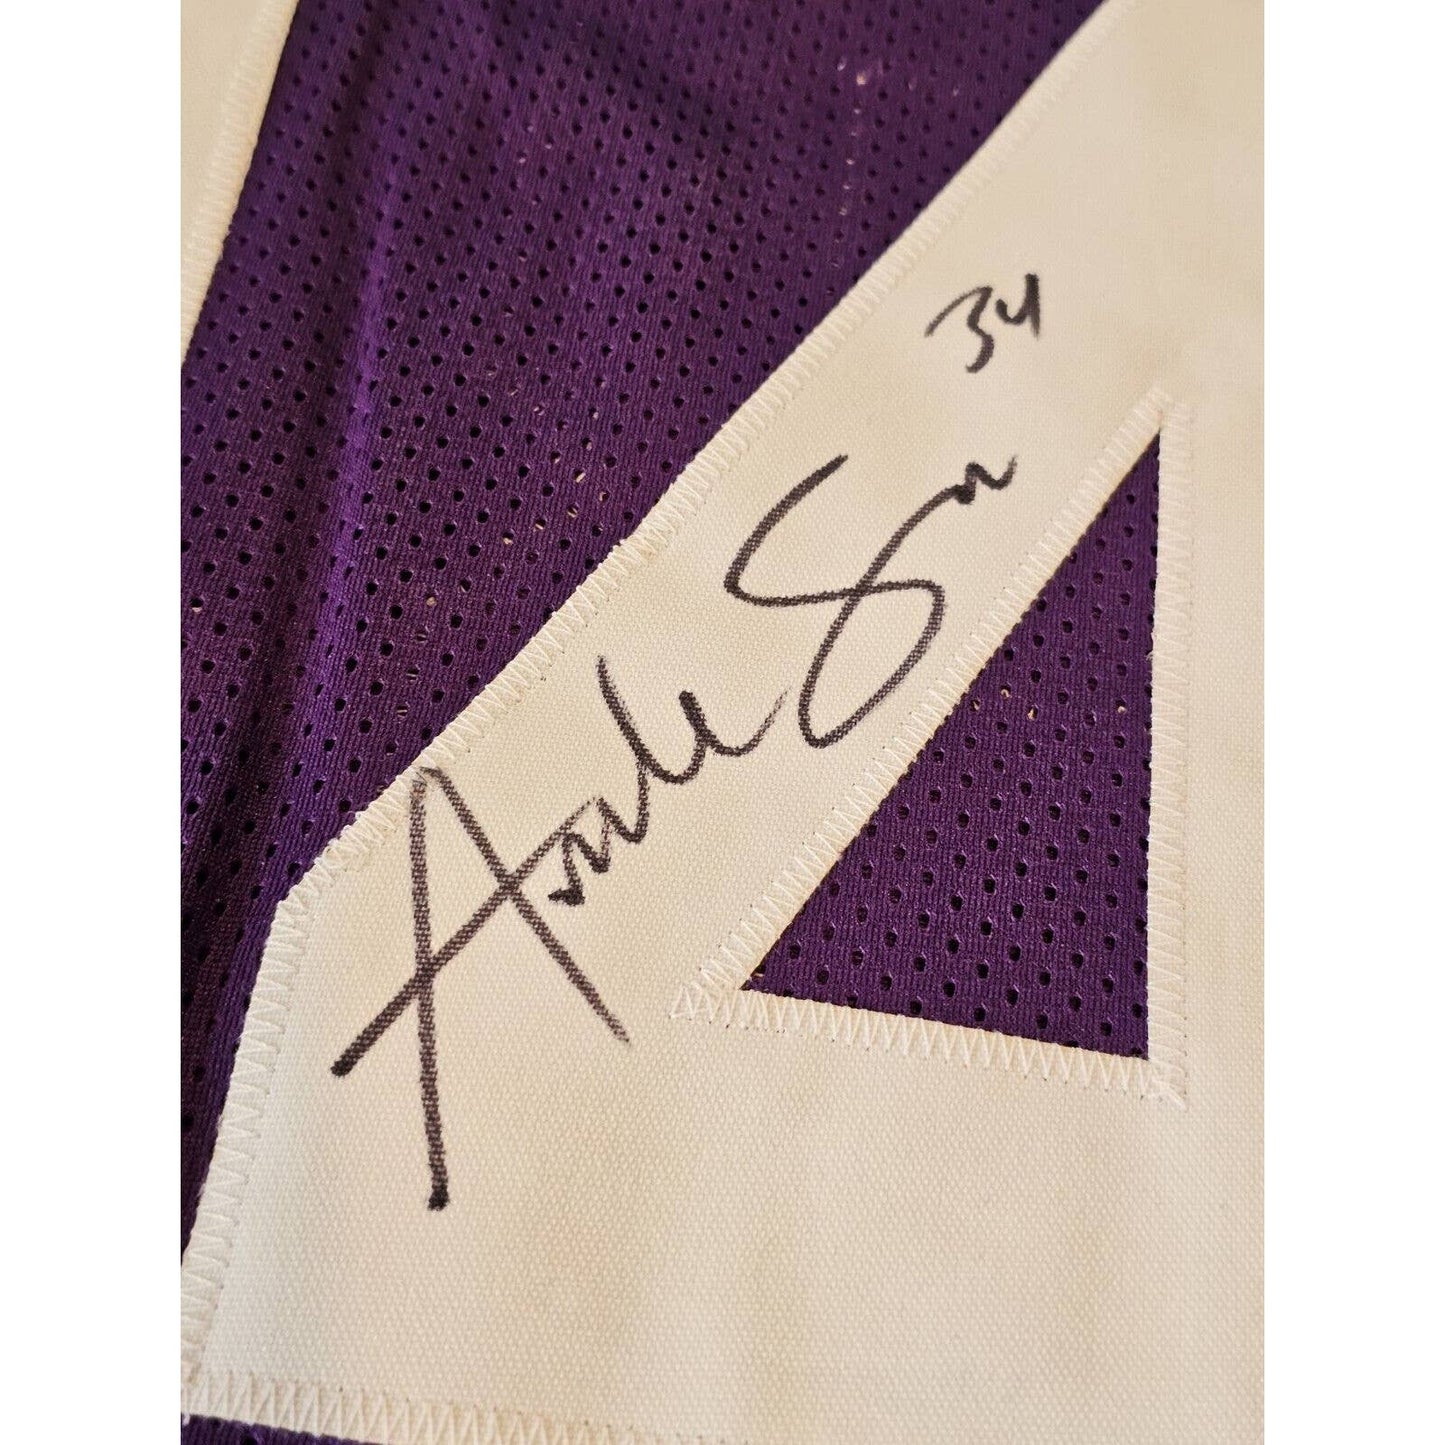 Andrew Sendejo Autographed/Signed Jersey JSA COA Minnesota Vikings Pro Bowler